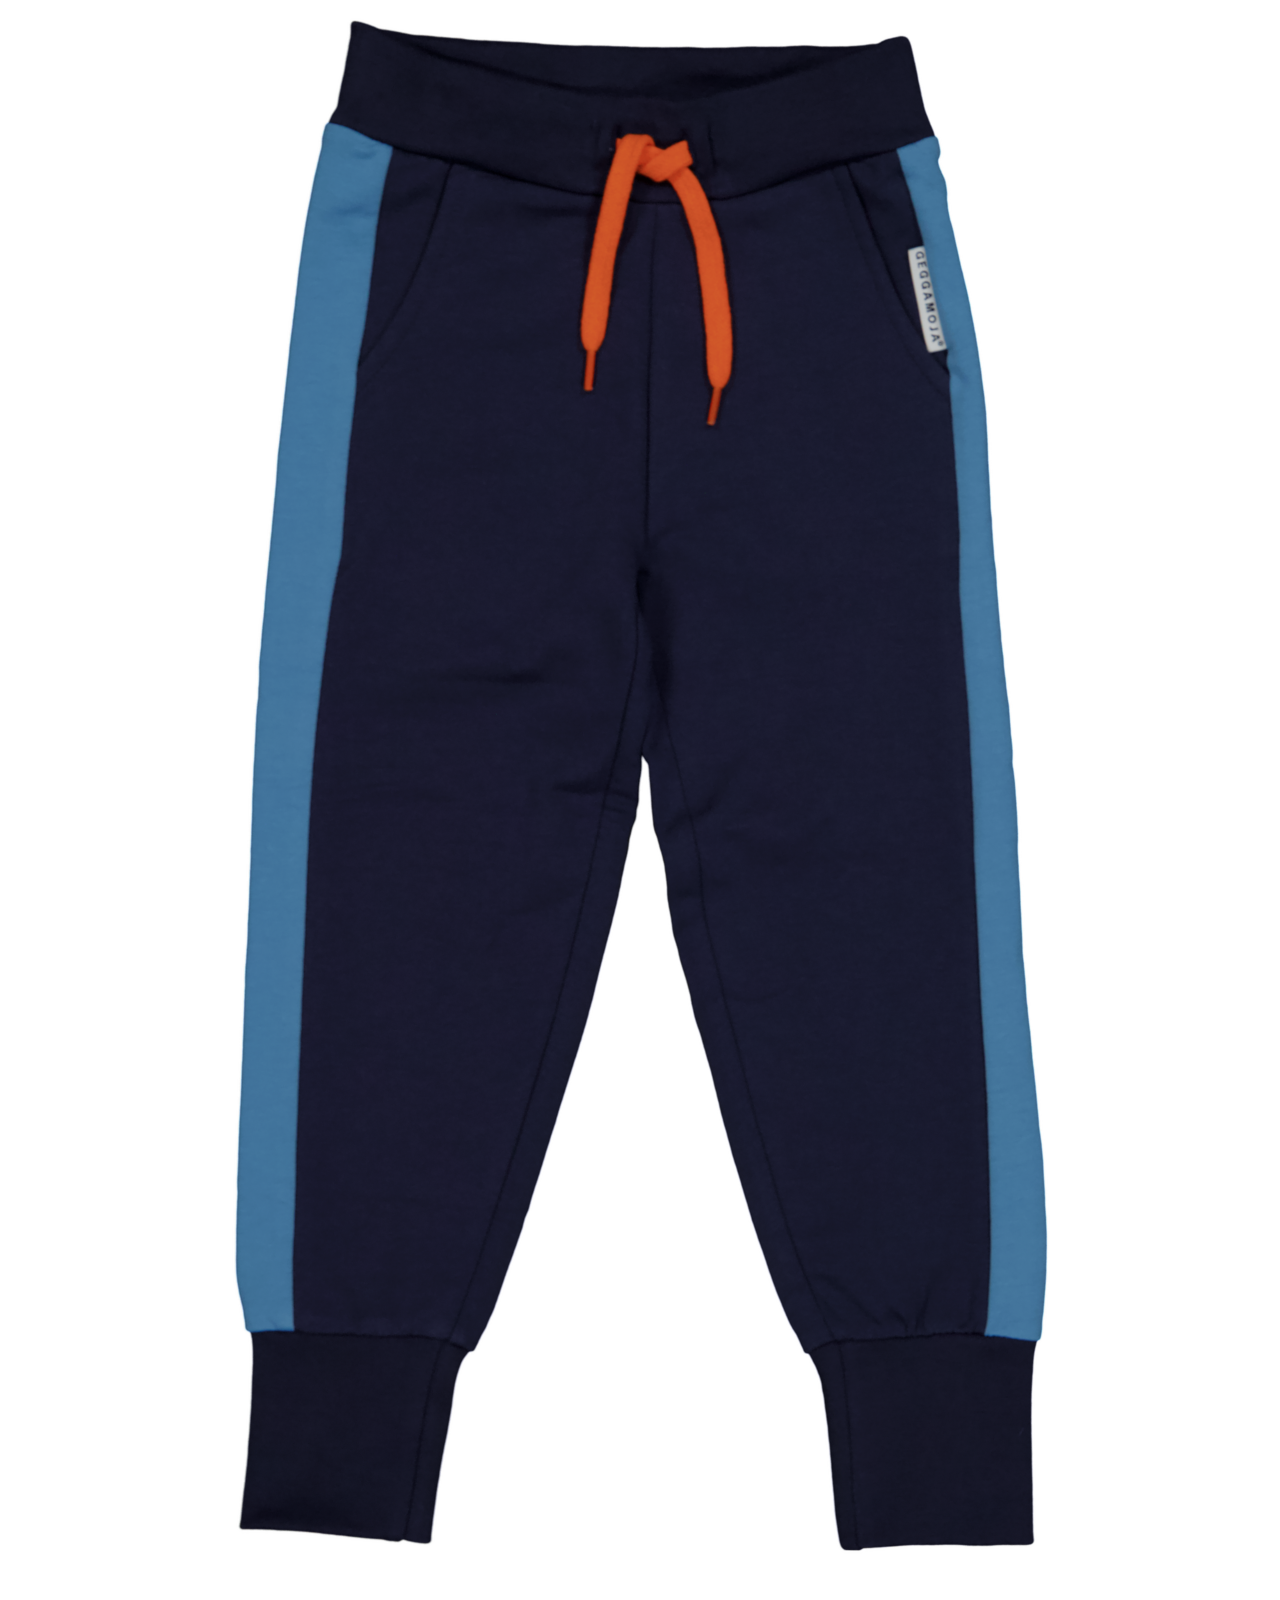 College pants Navy 122/128